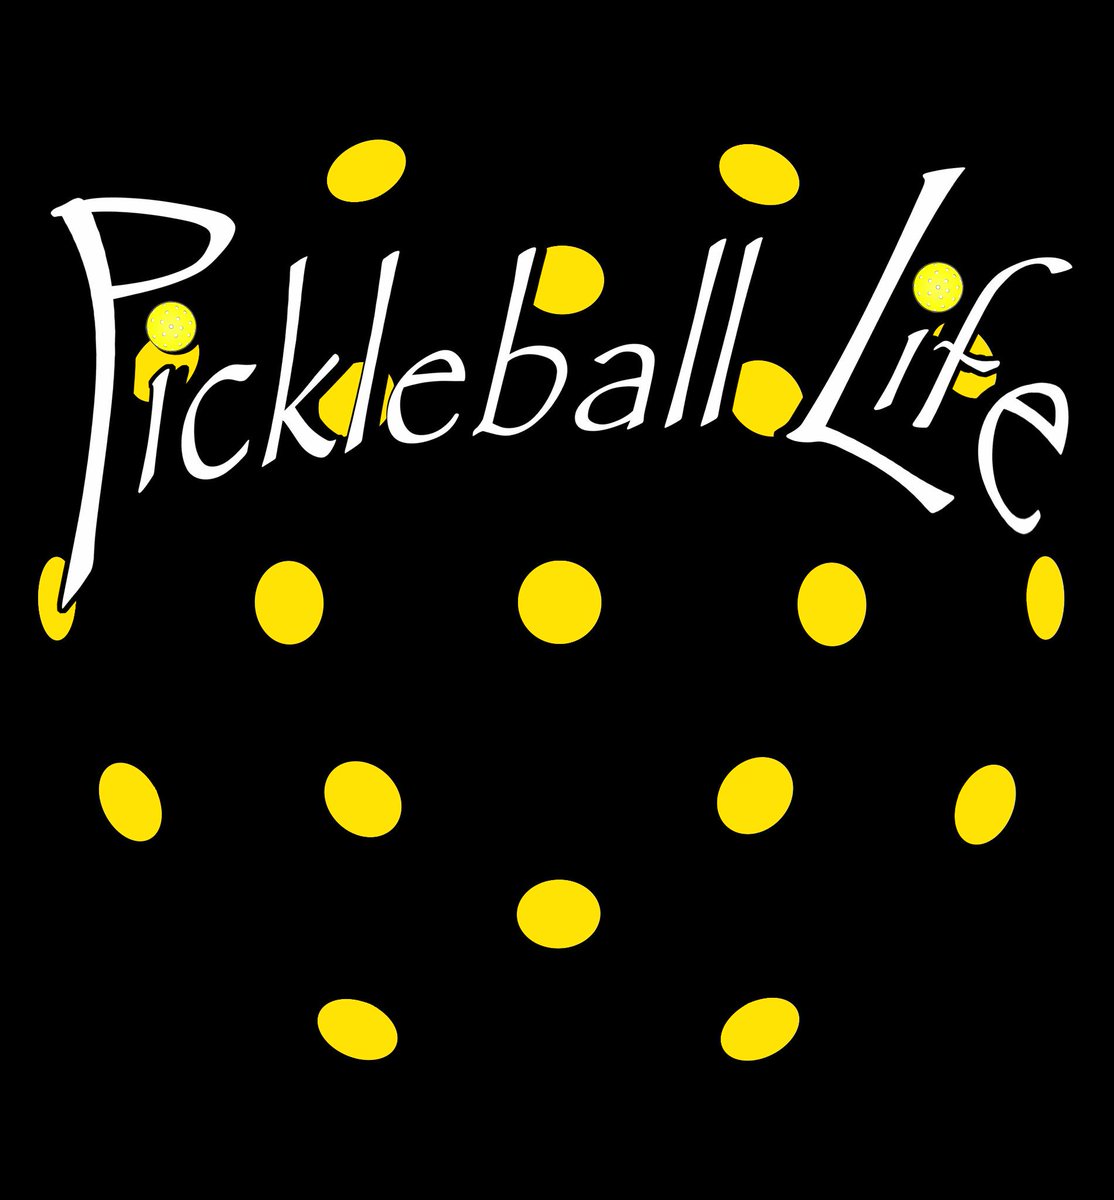 2 new tees coming soon to pickleballmaniac.com! What do you think? #pickleball #pickleballshirts